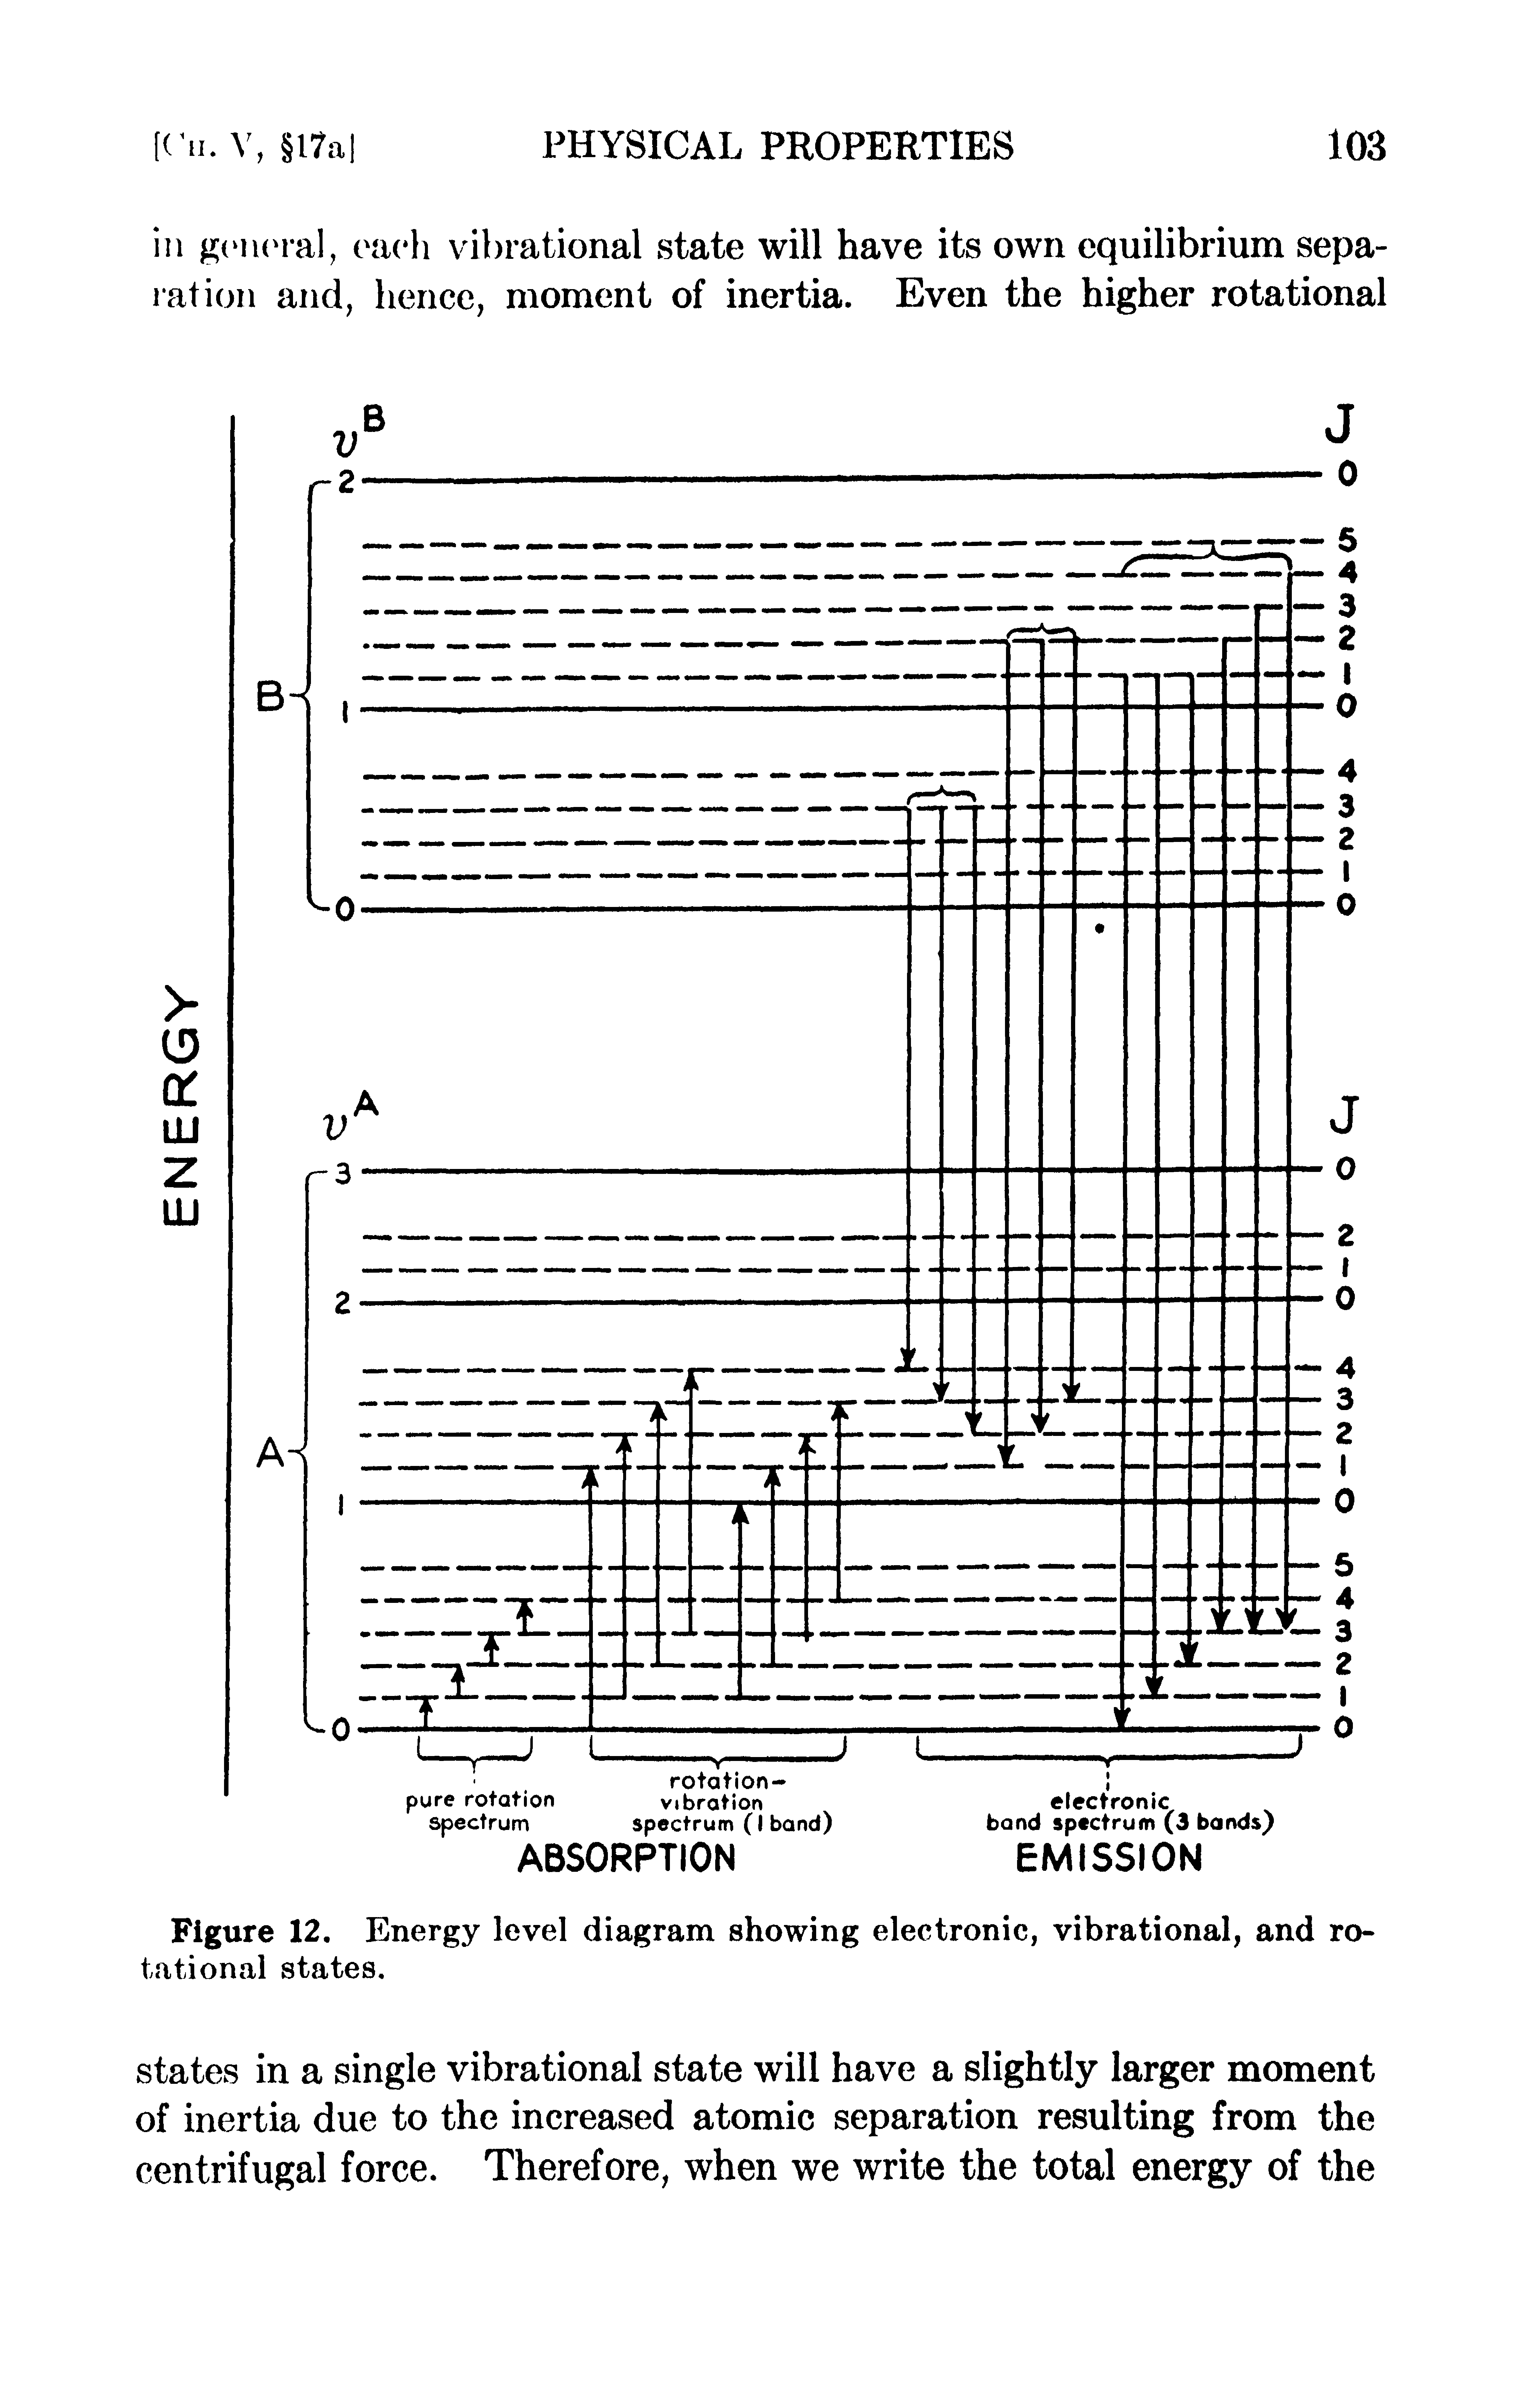 Figure 12. Energy level diagram showing electronic, vibrational, and rotational states.